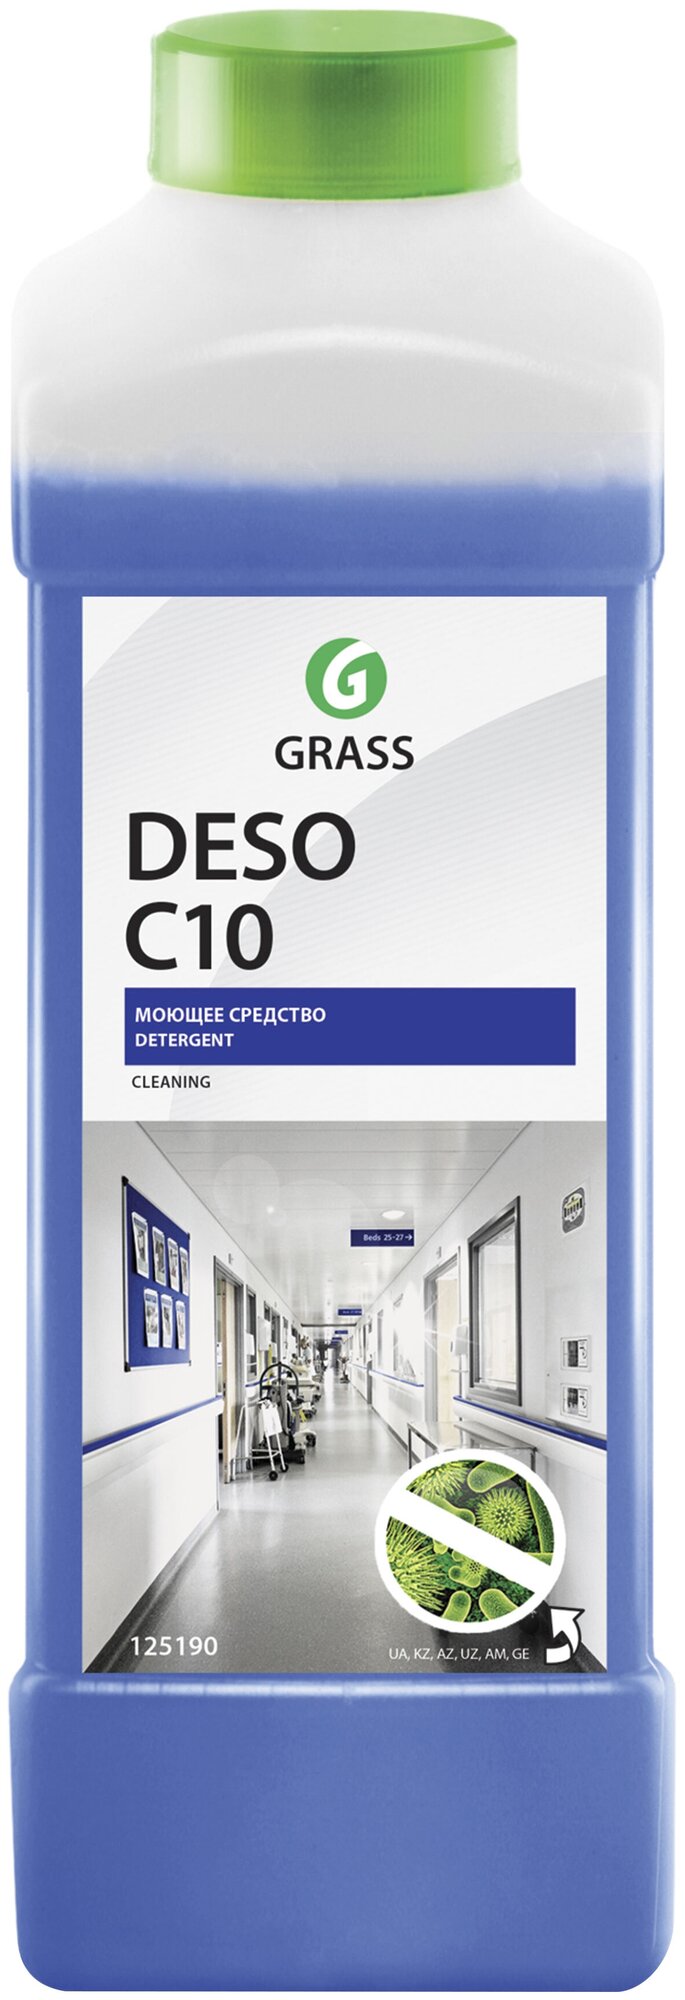 Средство для чистки и дезинфекции Deso C-10 5 л Grass - фото №1